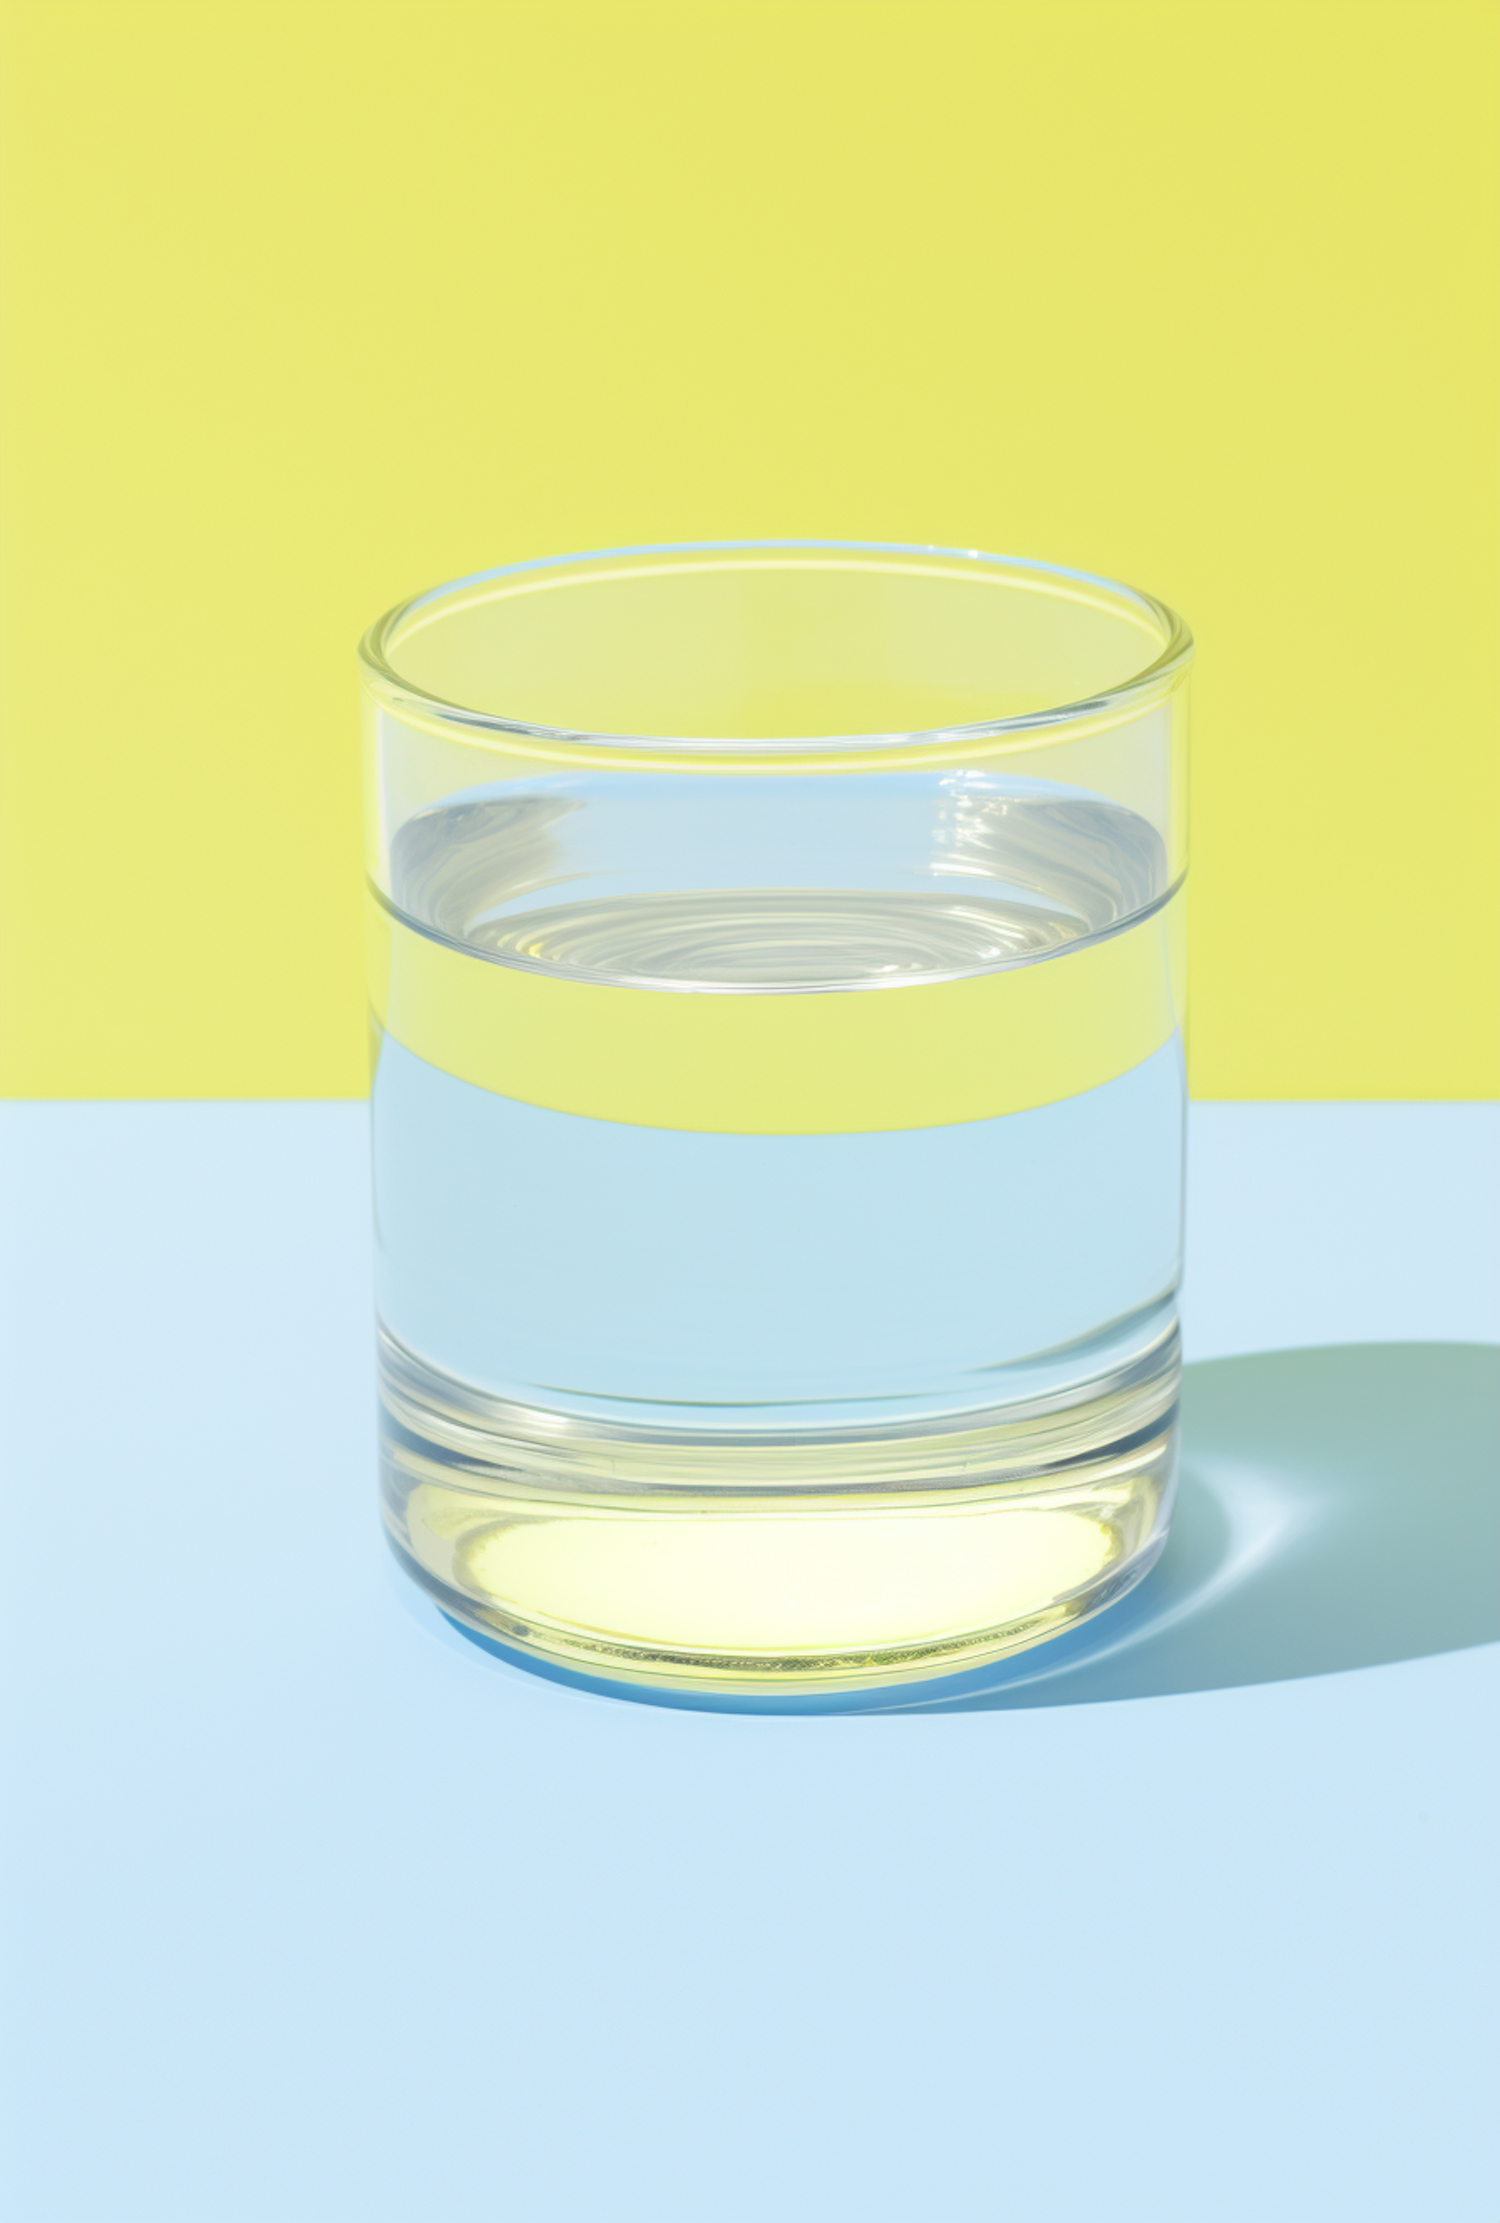 Tranquil Duality: Half-Filled Glass Against Split-Color Backdrop